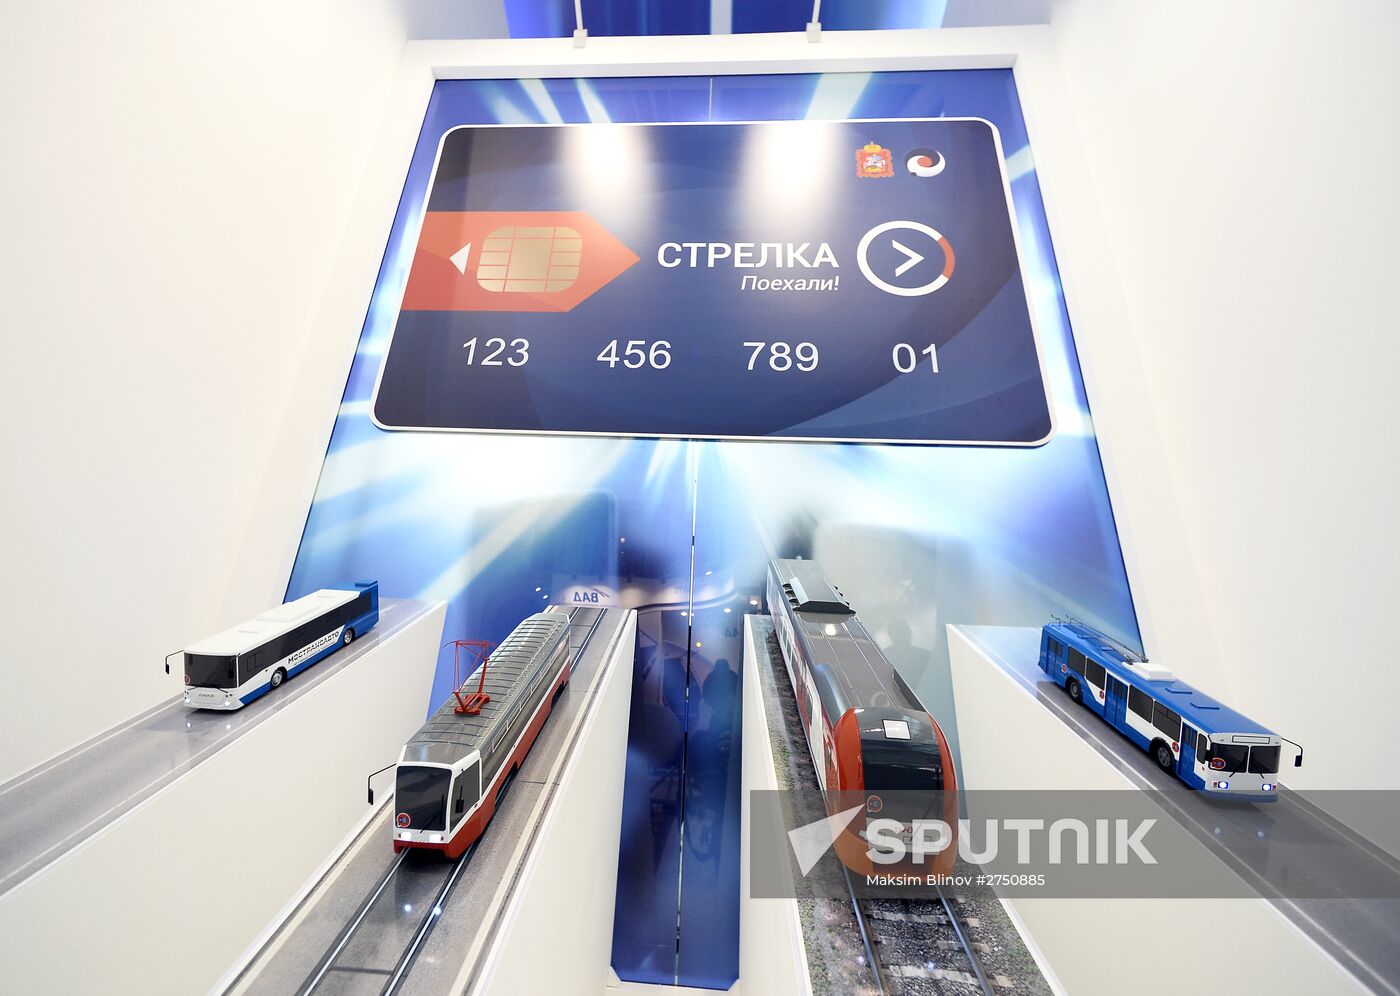 Ninth Transport of Russia International Exhibition